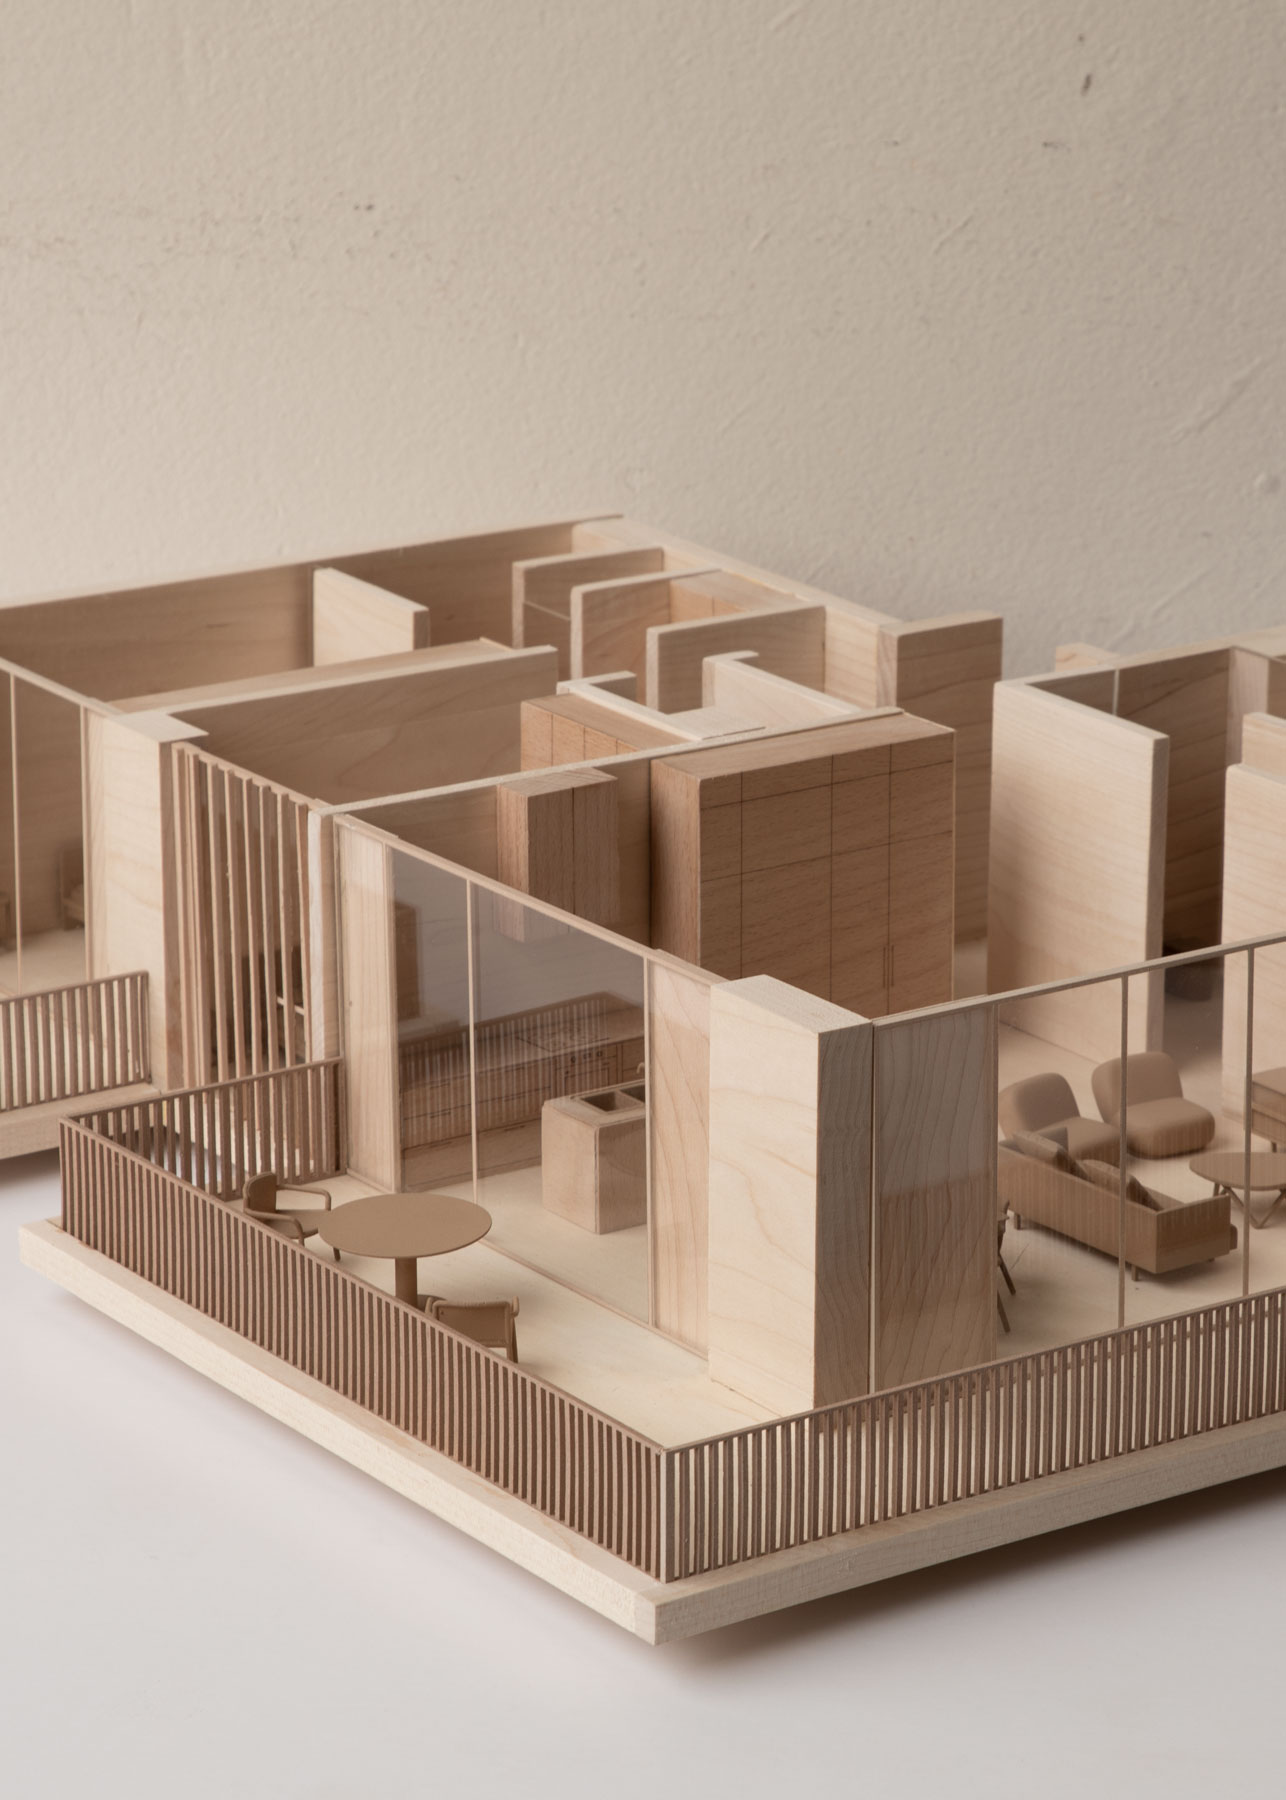 Timber Apartment Models help future buyers understand floor plans